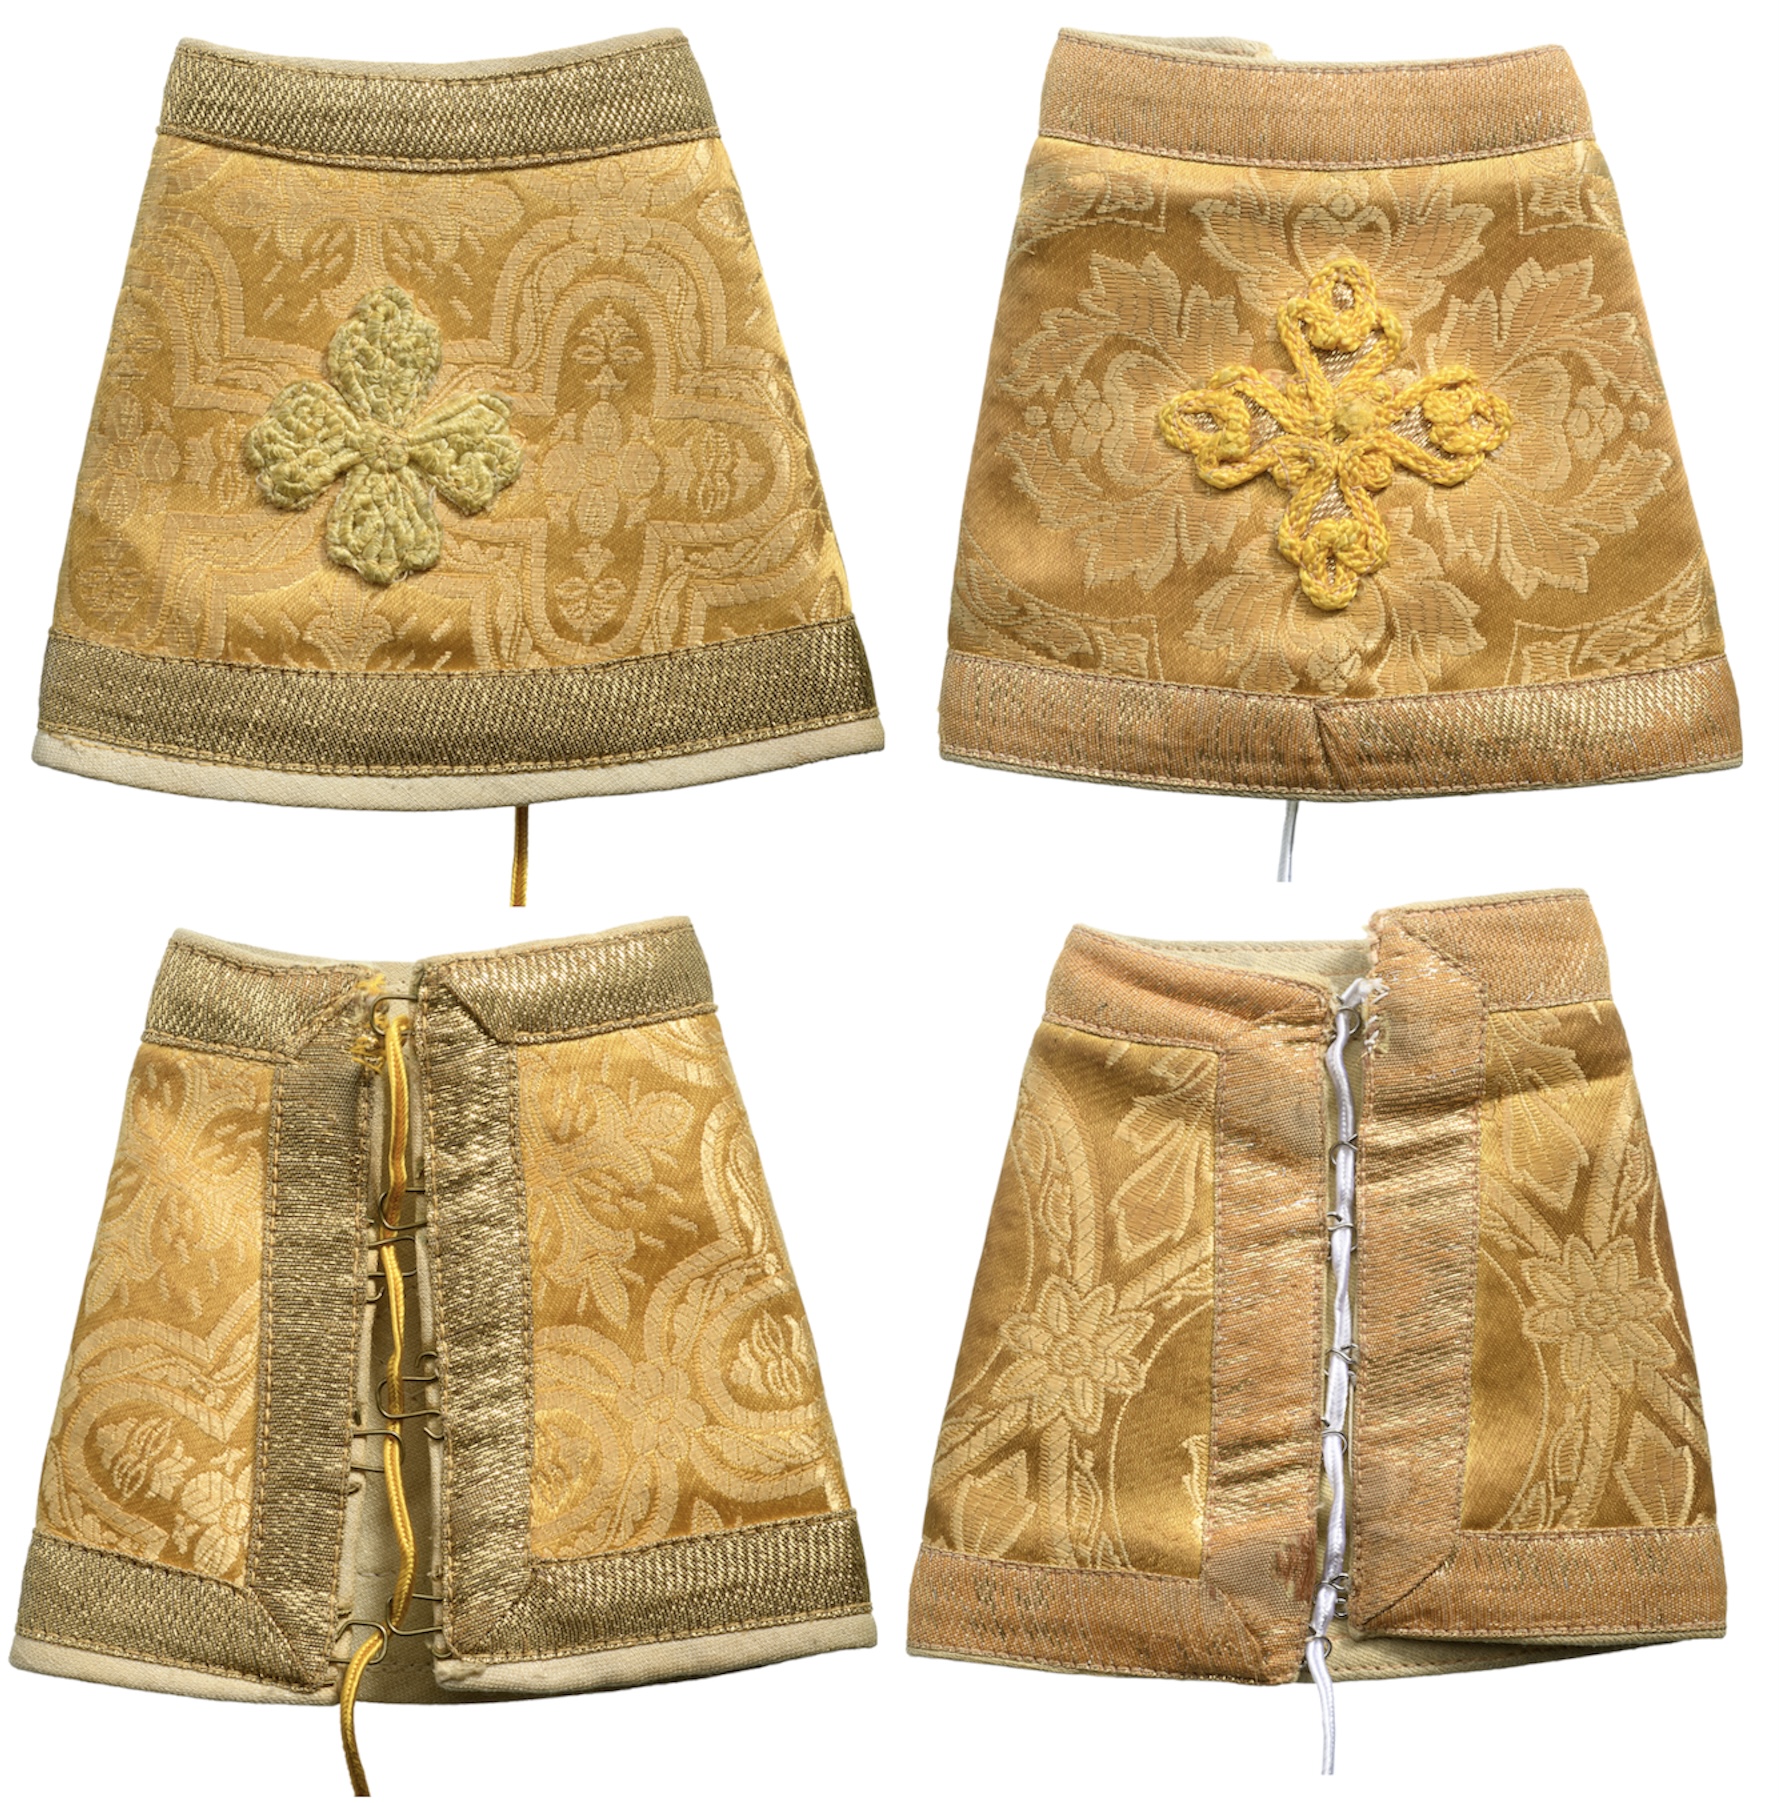 Pair of Orthodox Liturgical Fabric Cuffs (Epimanikia)